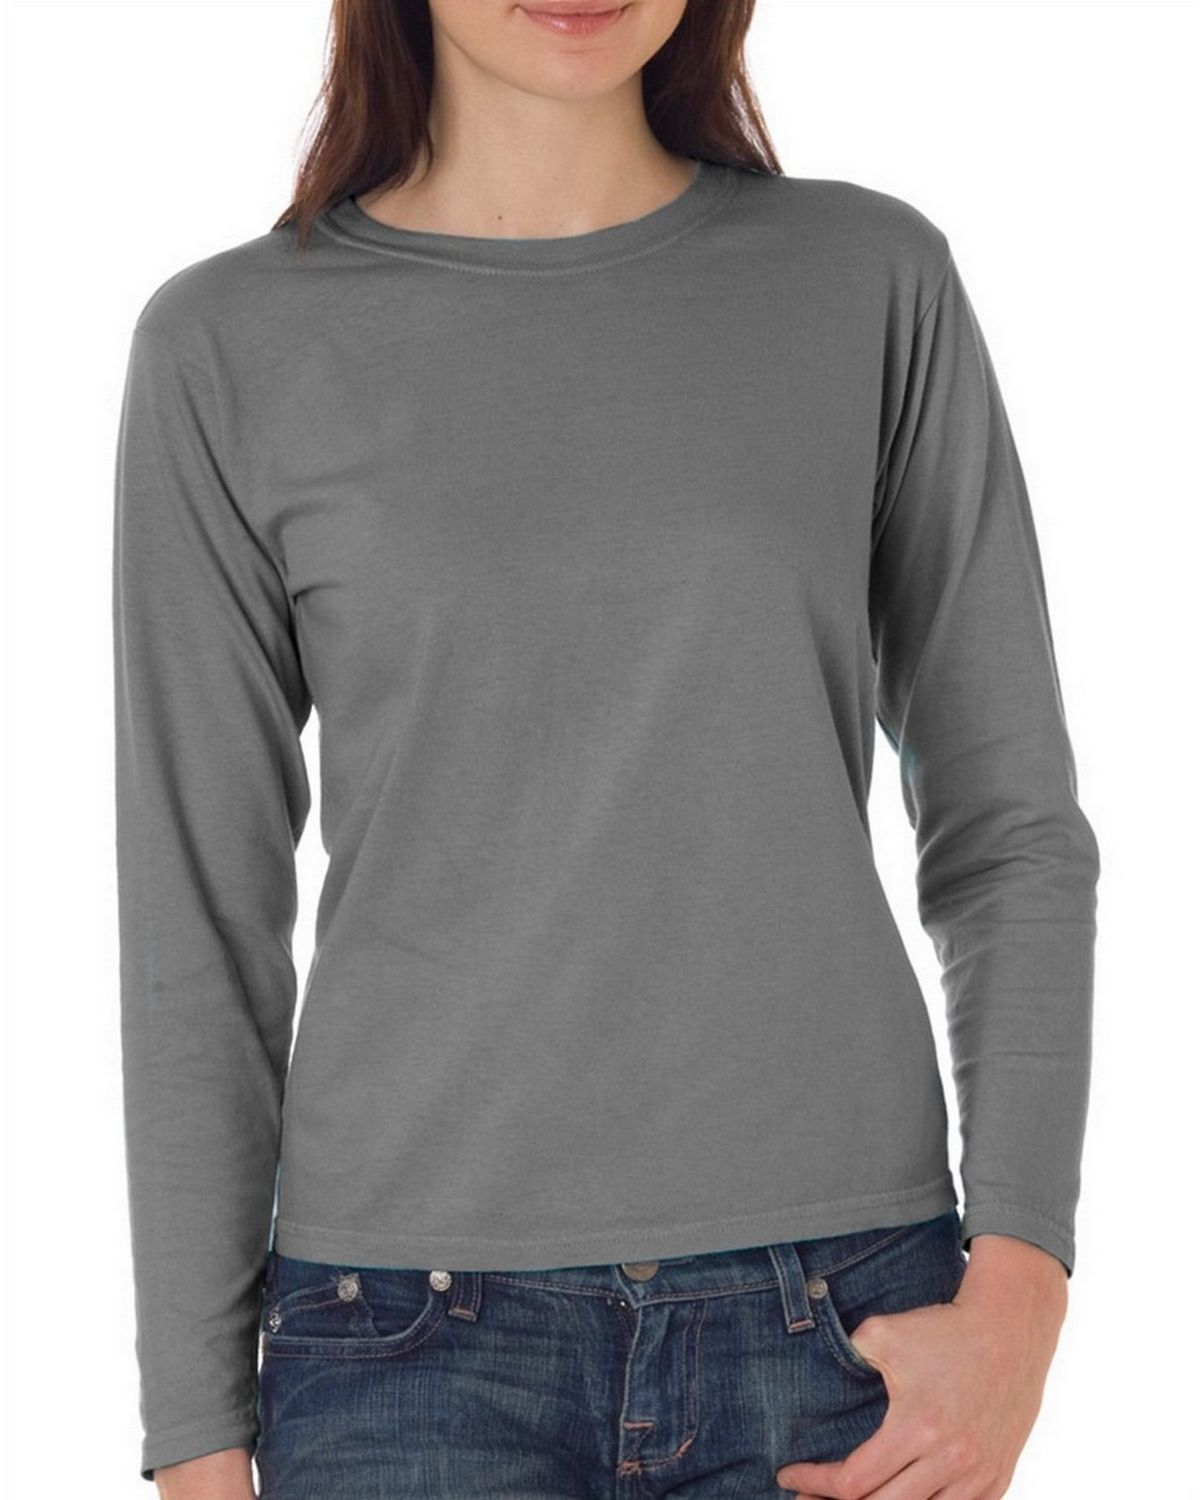 Chouinard 3014 Ladies Garment-Dyed Long Sleeve T-Shirt - ApparelnBags.com